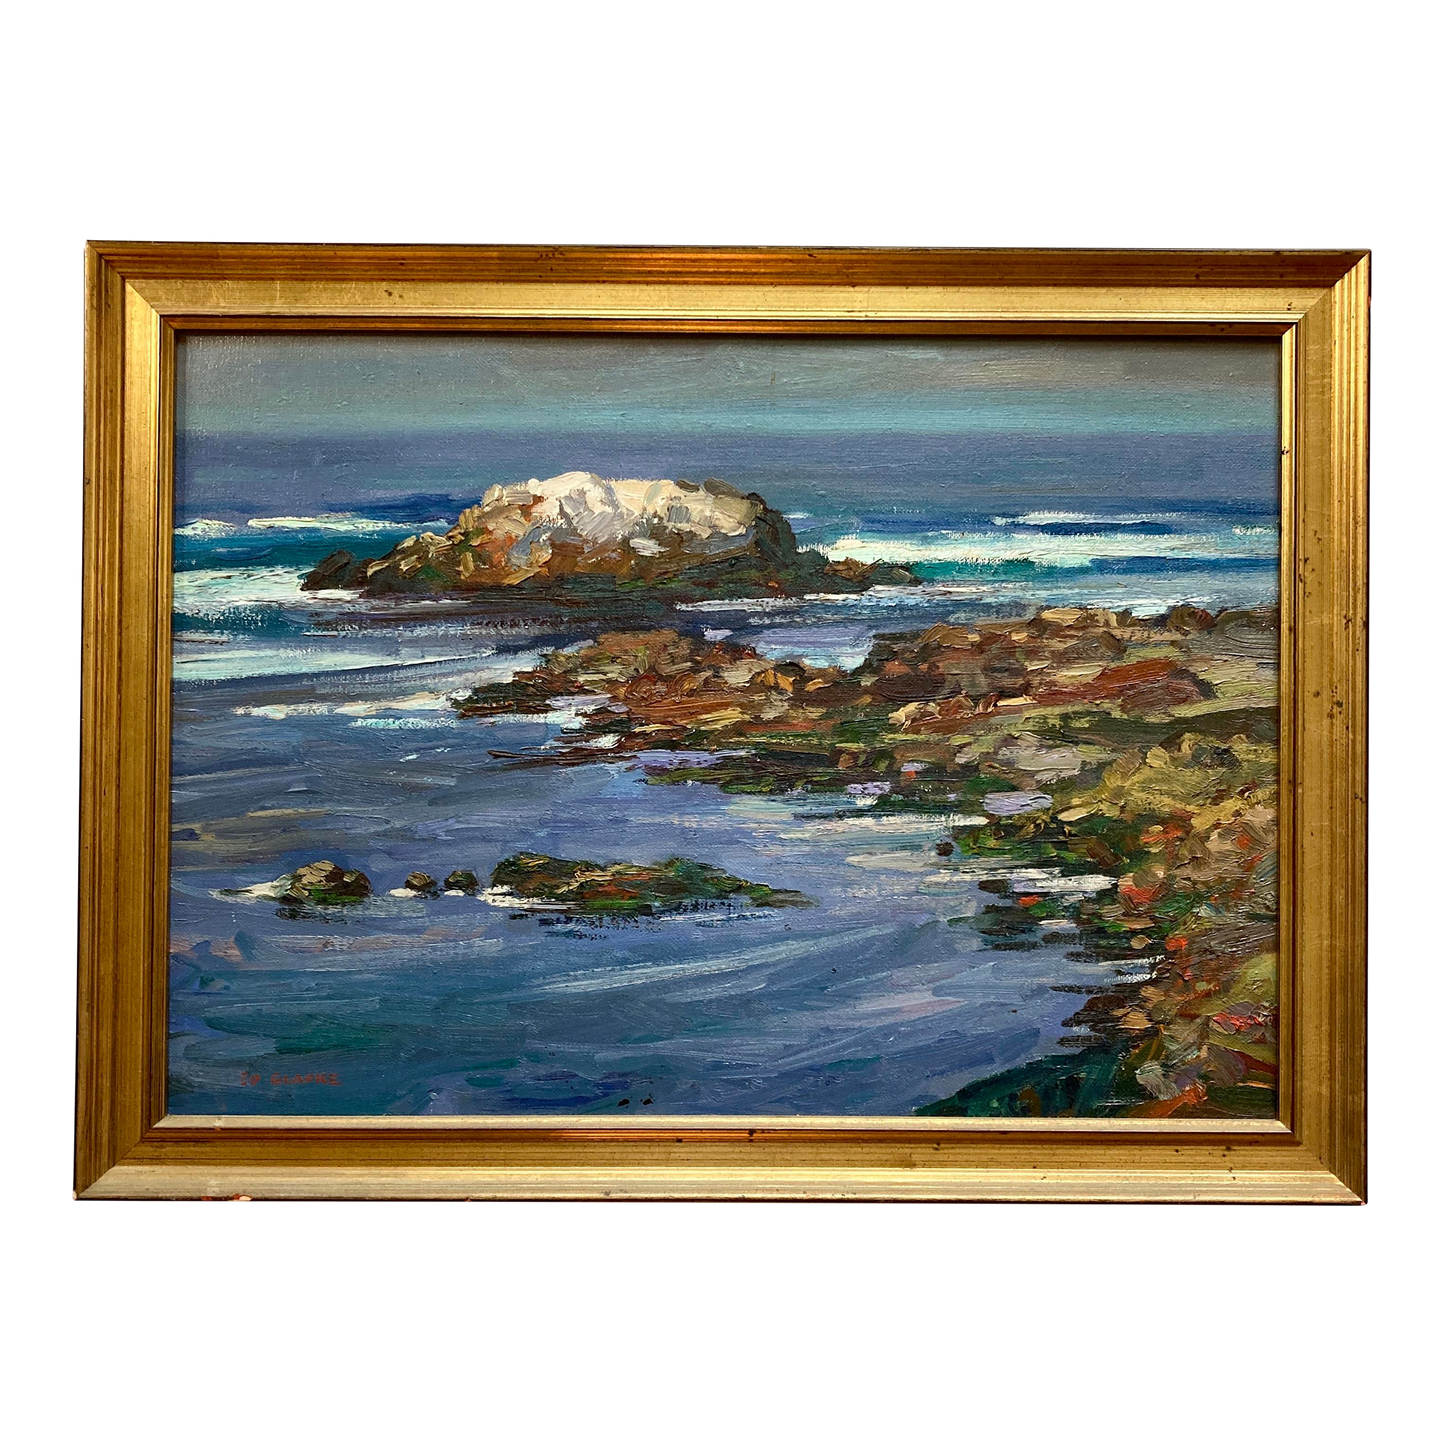 Edward Glafke 'Bird Rock' Impressionist Seascape Painting